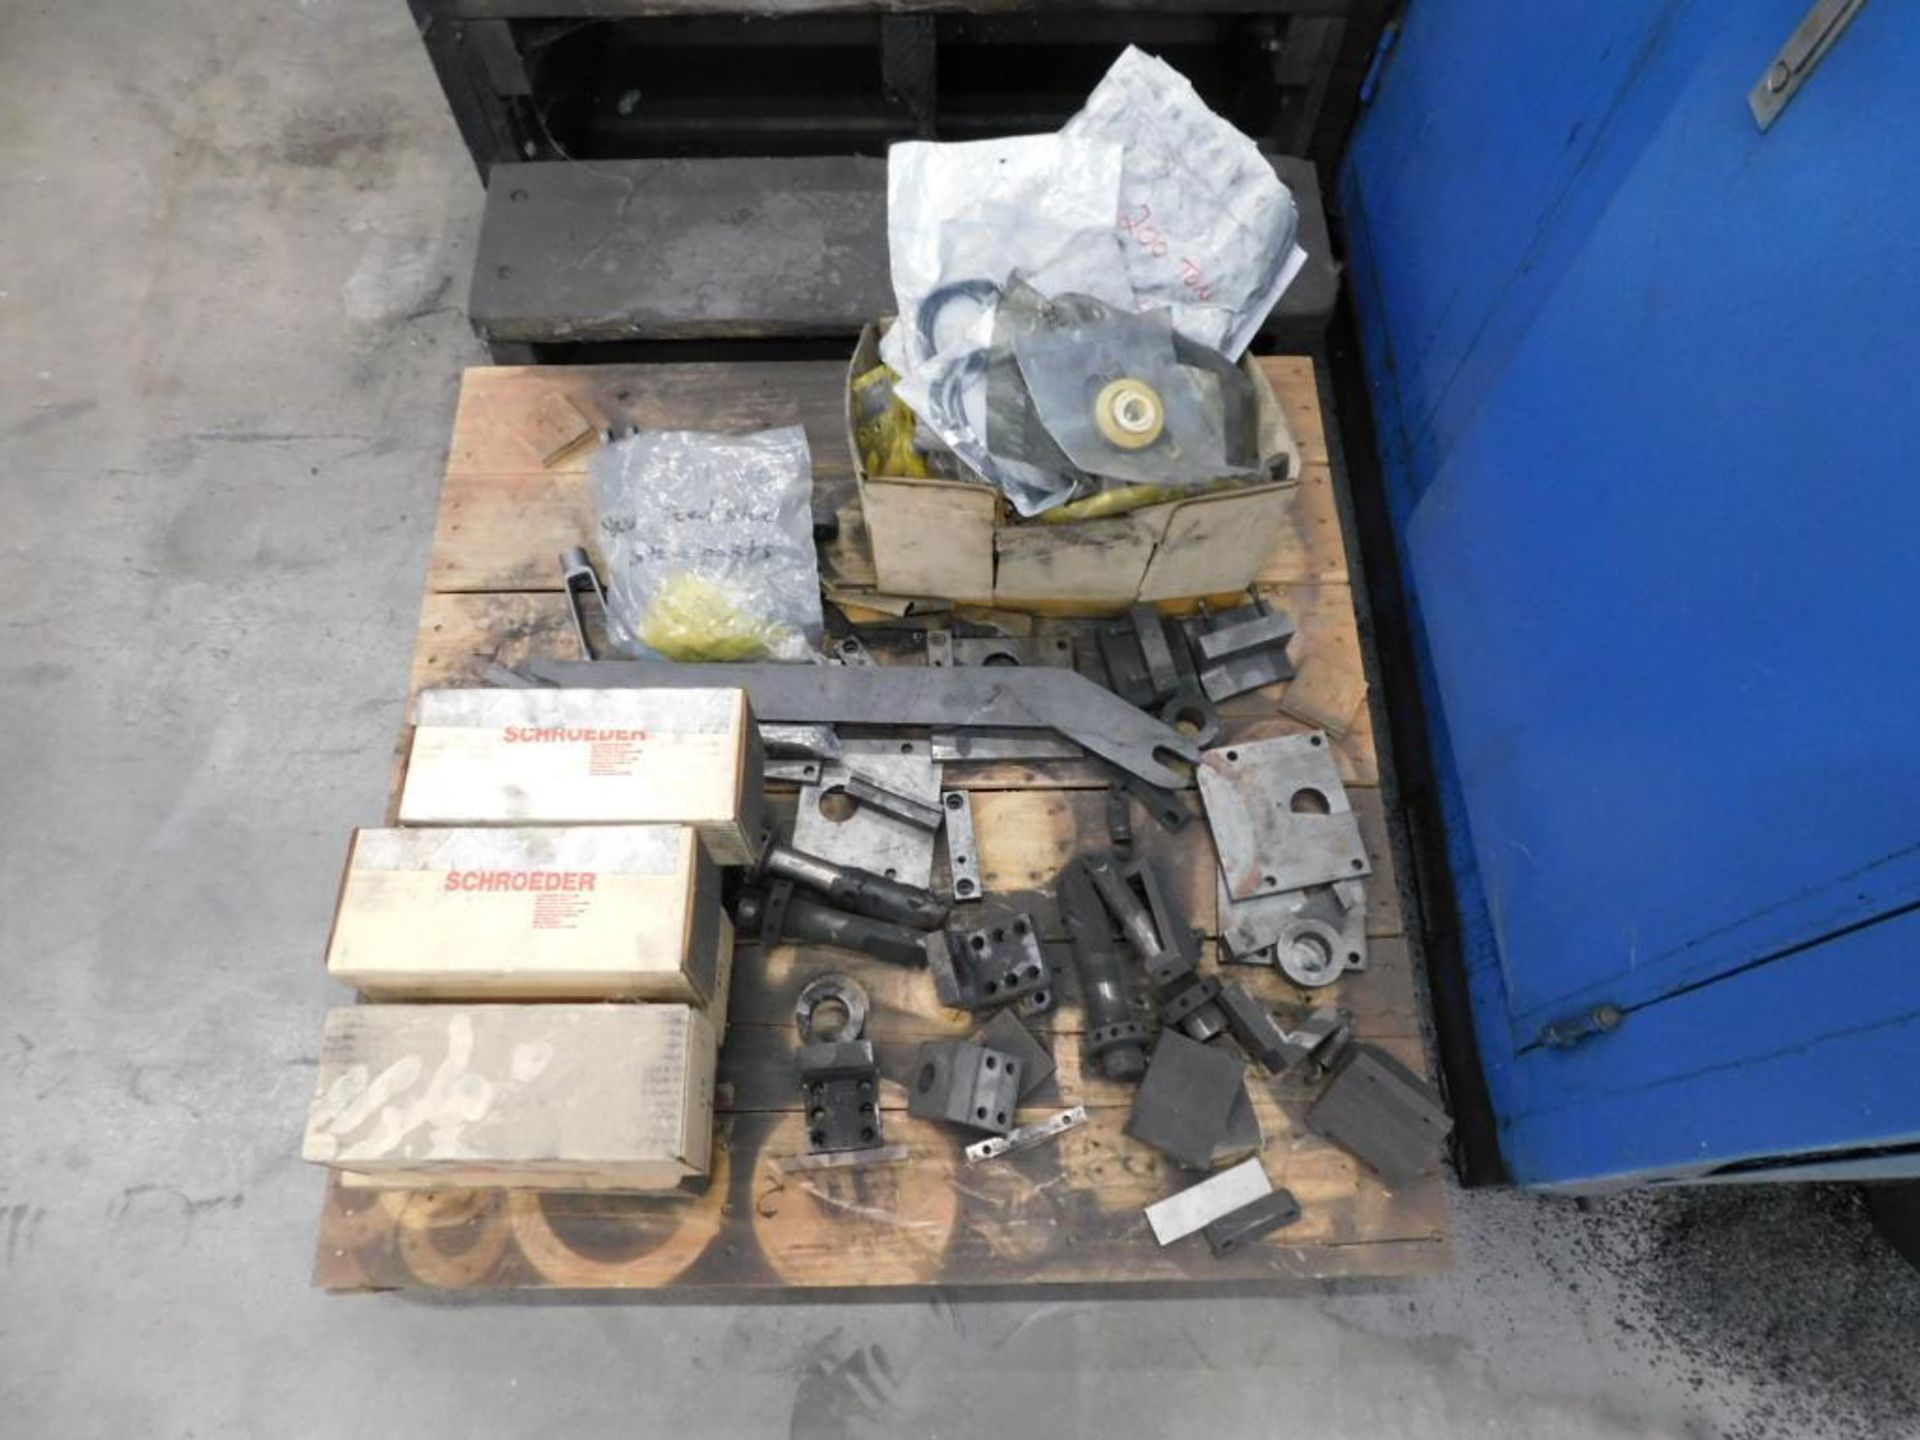 Kotaki Powder Compacting Press, Hydraulic, Model KPH-100, S/N: 2123, 100 Ton Maximum Pressing Force, - Image 23 of 27